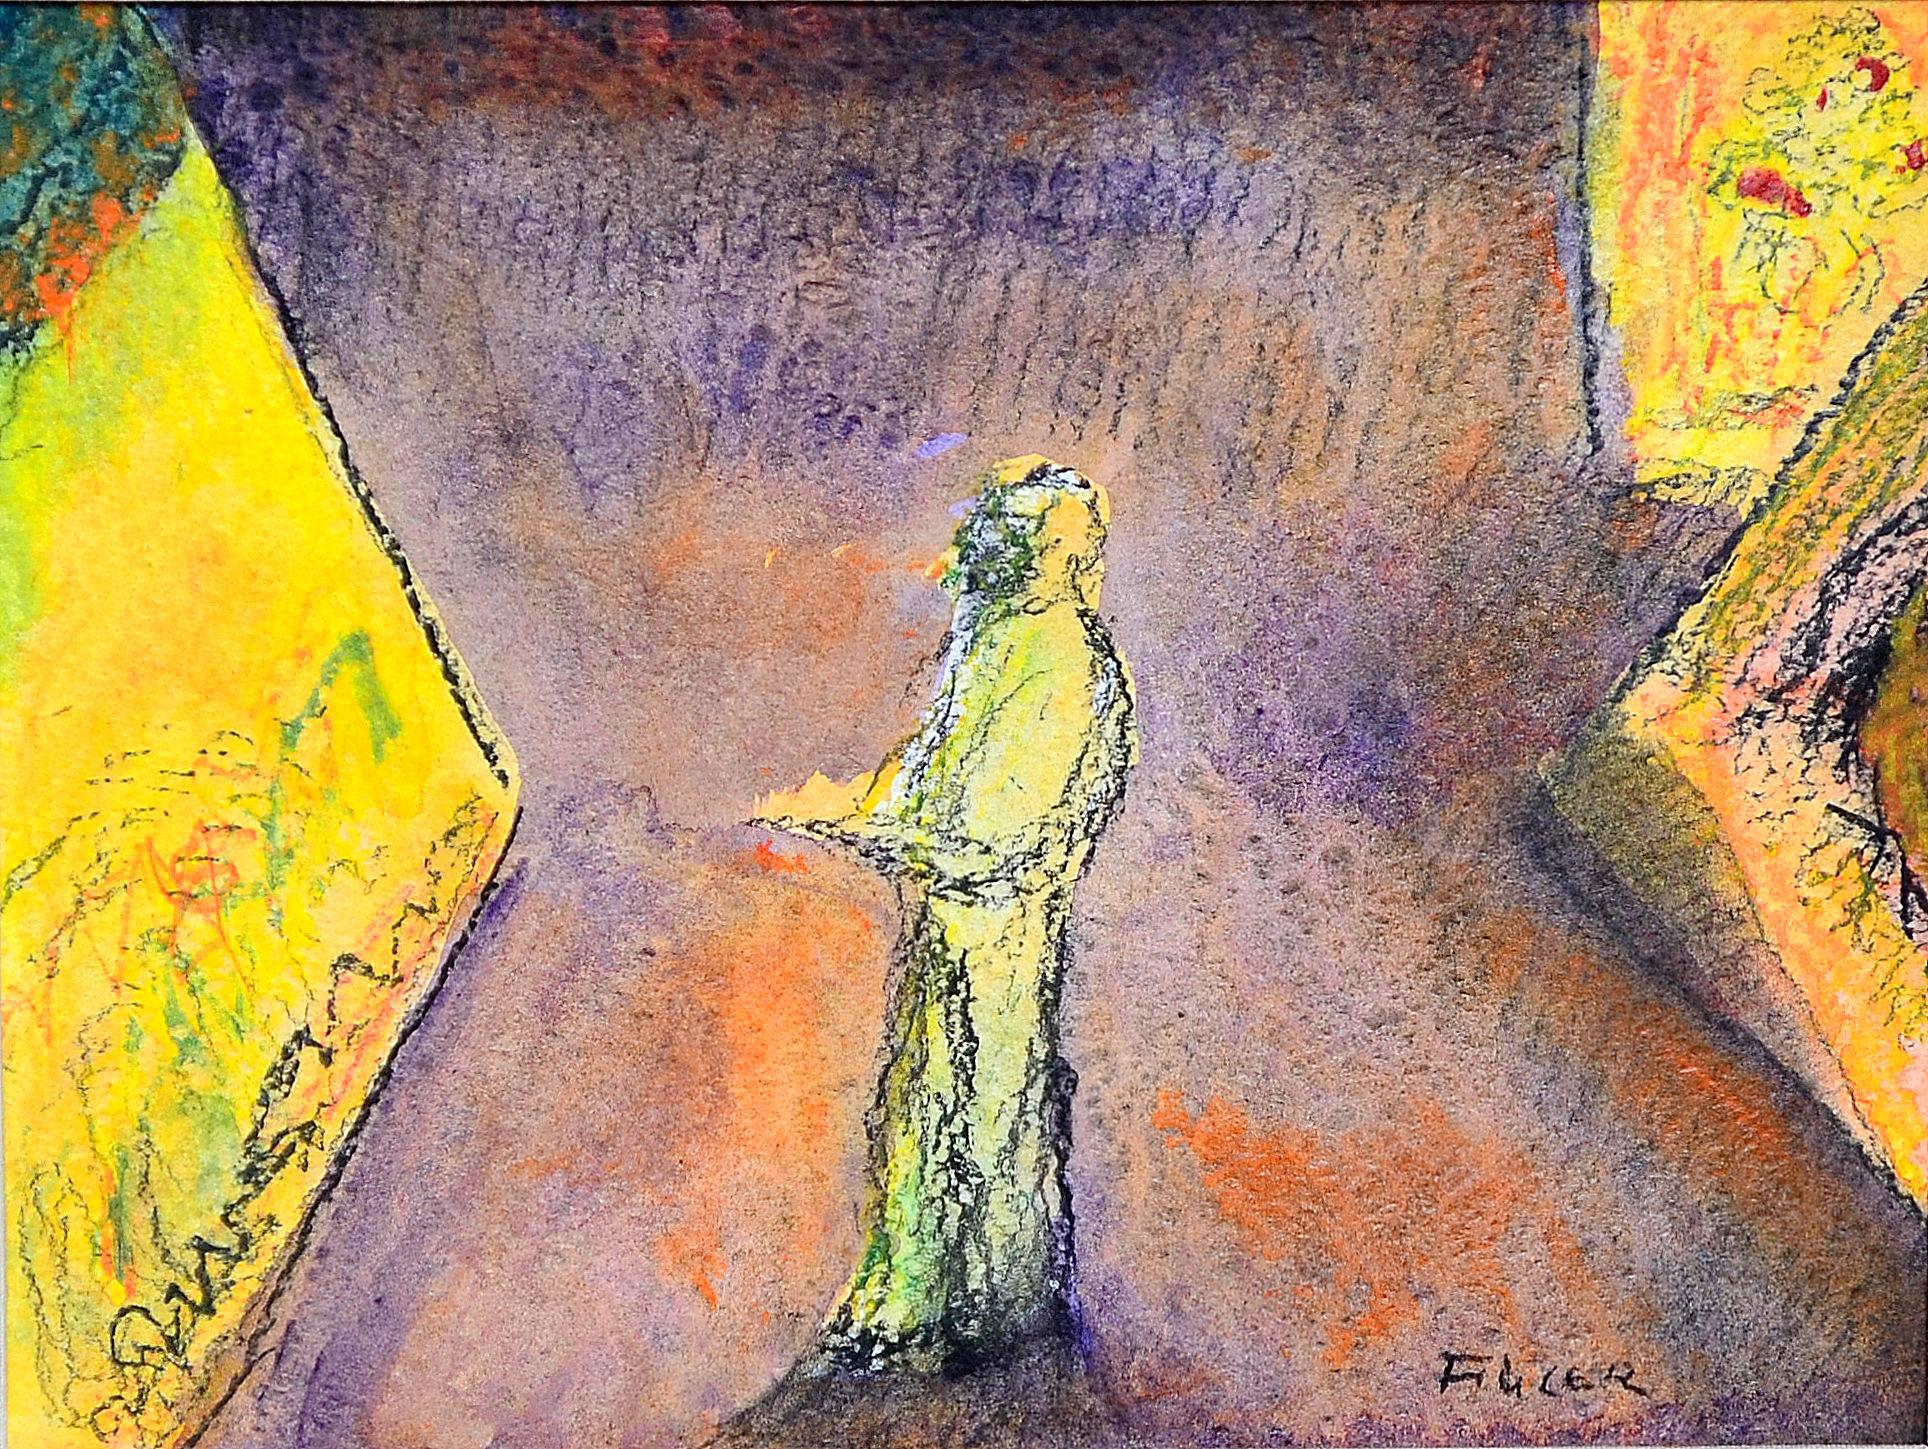 "Artist at his studio" - Horizontal indoor purple and yellow painting.